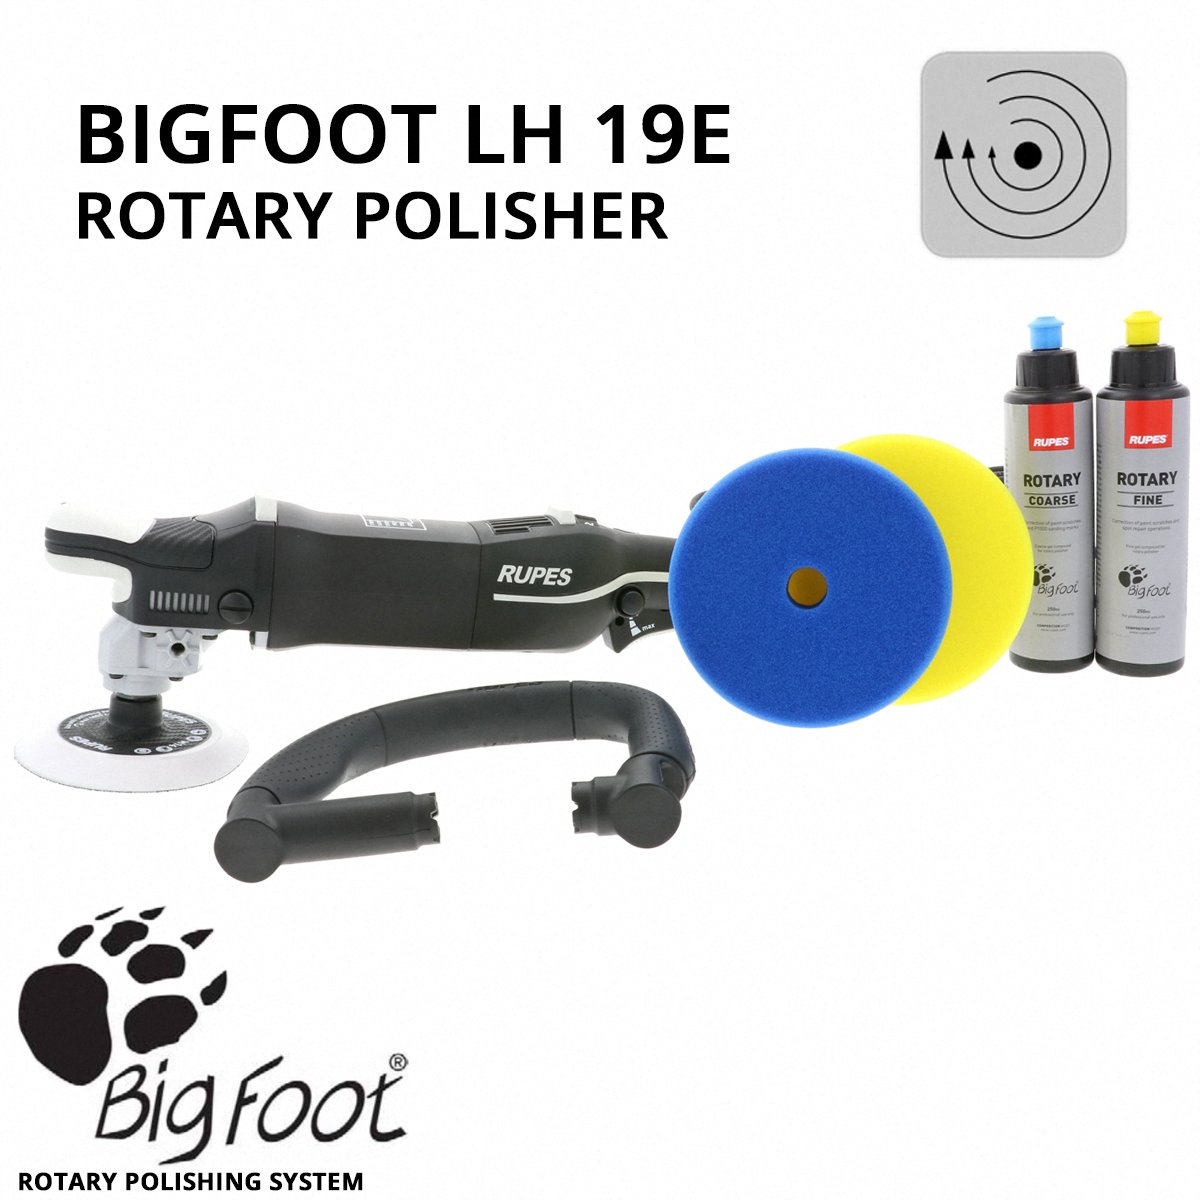 BigFoot LH 19E Rotary Polisher Kit - 1200watt